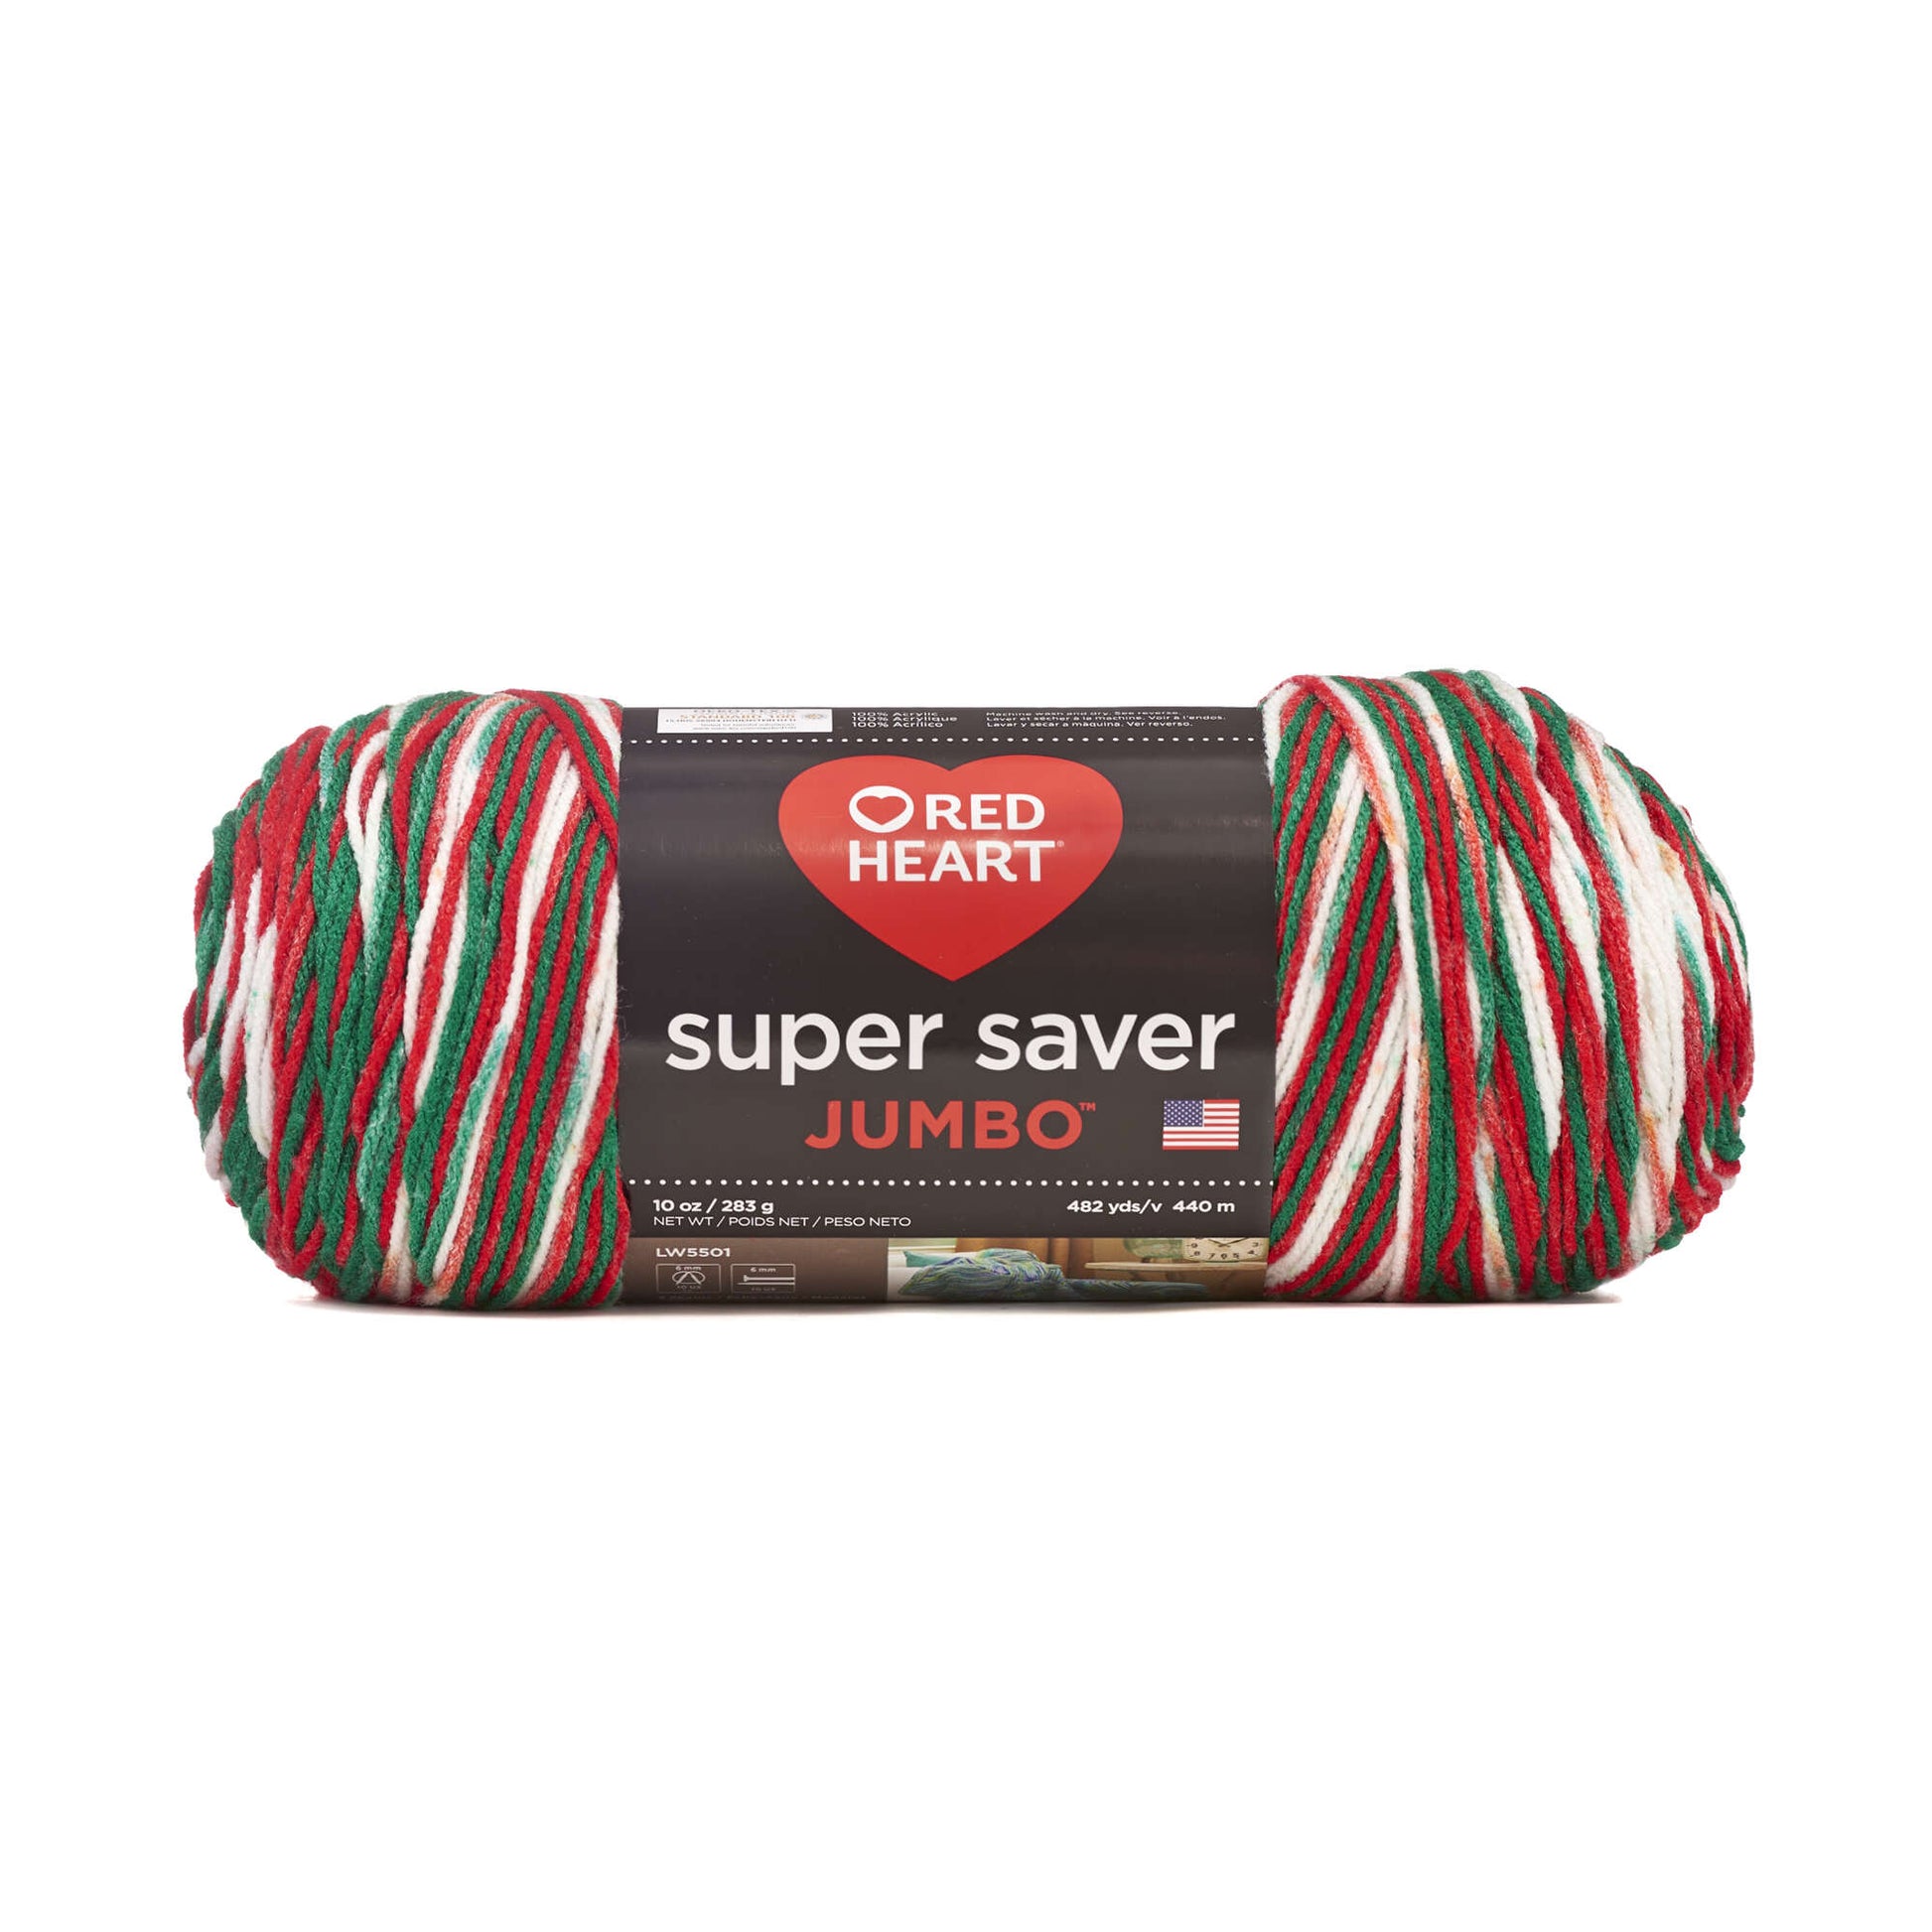 Red Heart Super Saver Jumbo Yarn - Discontinued Shades